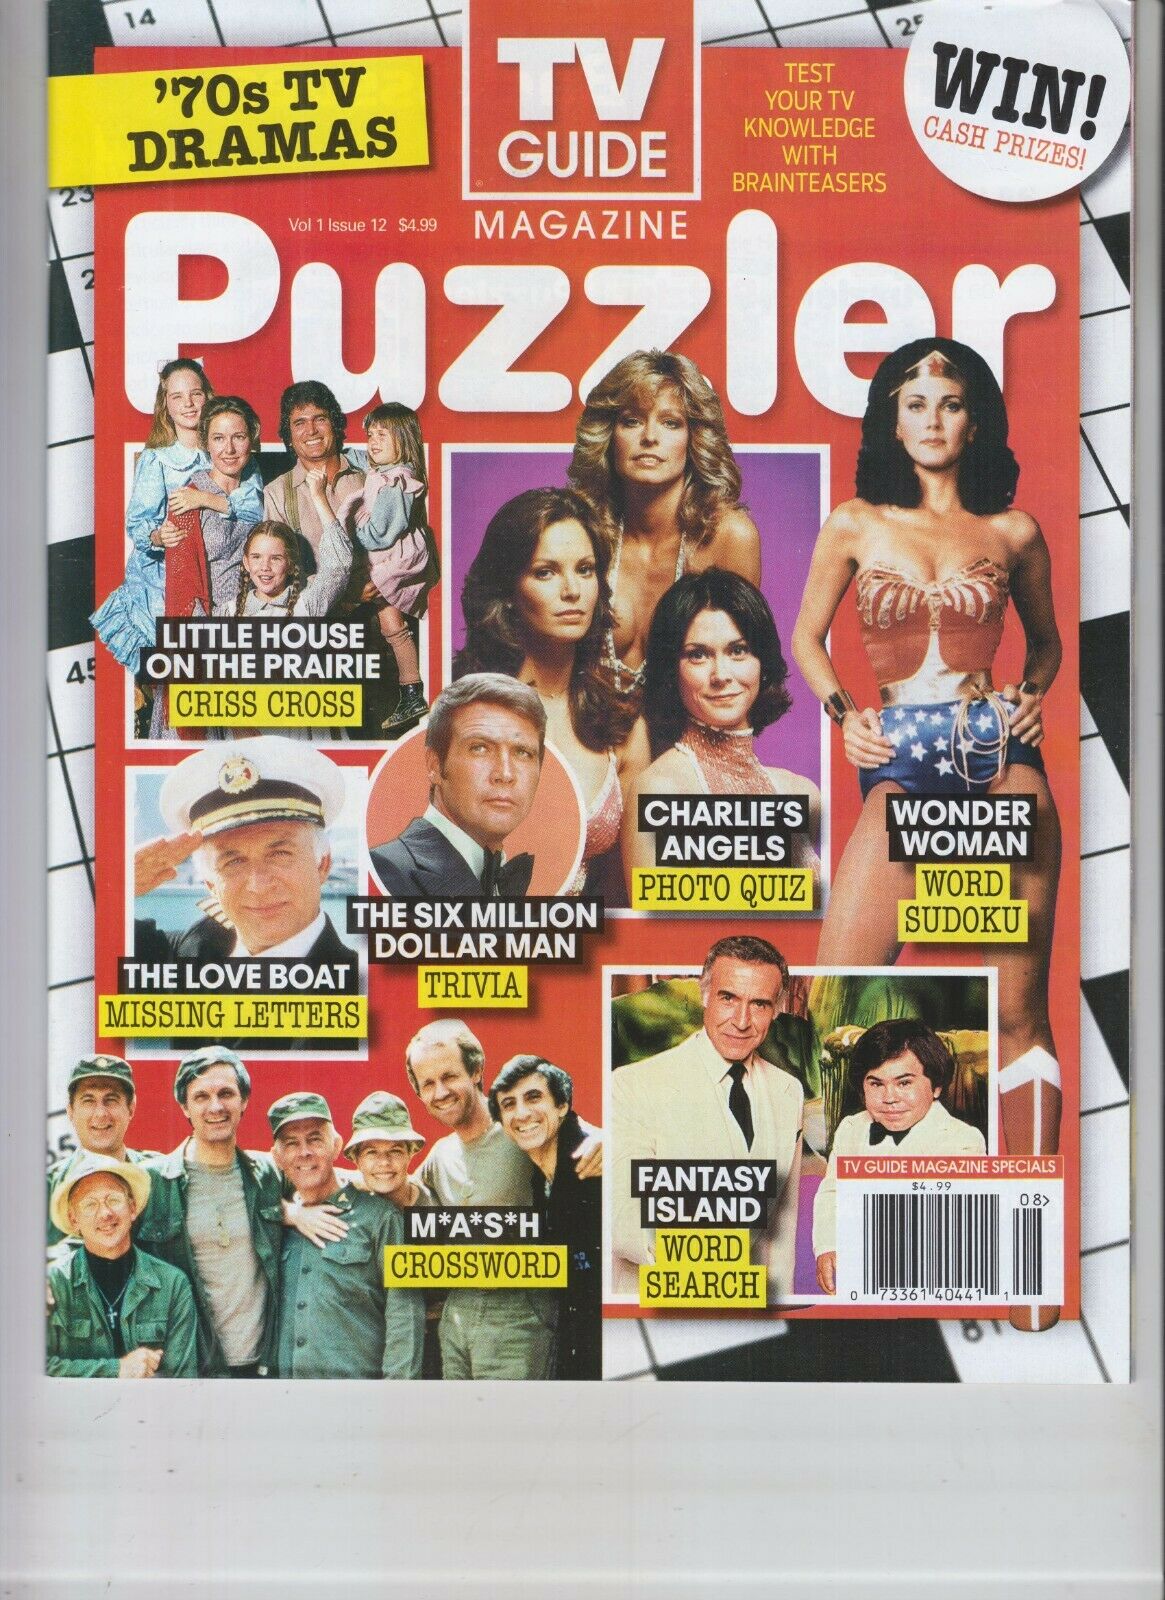 Charlie's Angels Mash Tv Guide Puzzler Magazine '70s Tv Dramas 2021 Vol 1 #12